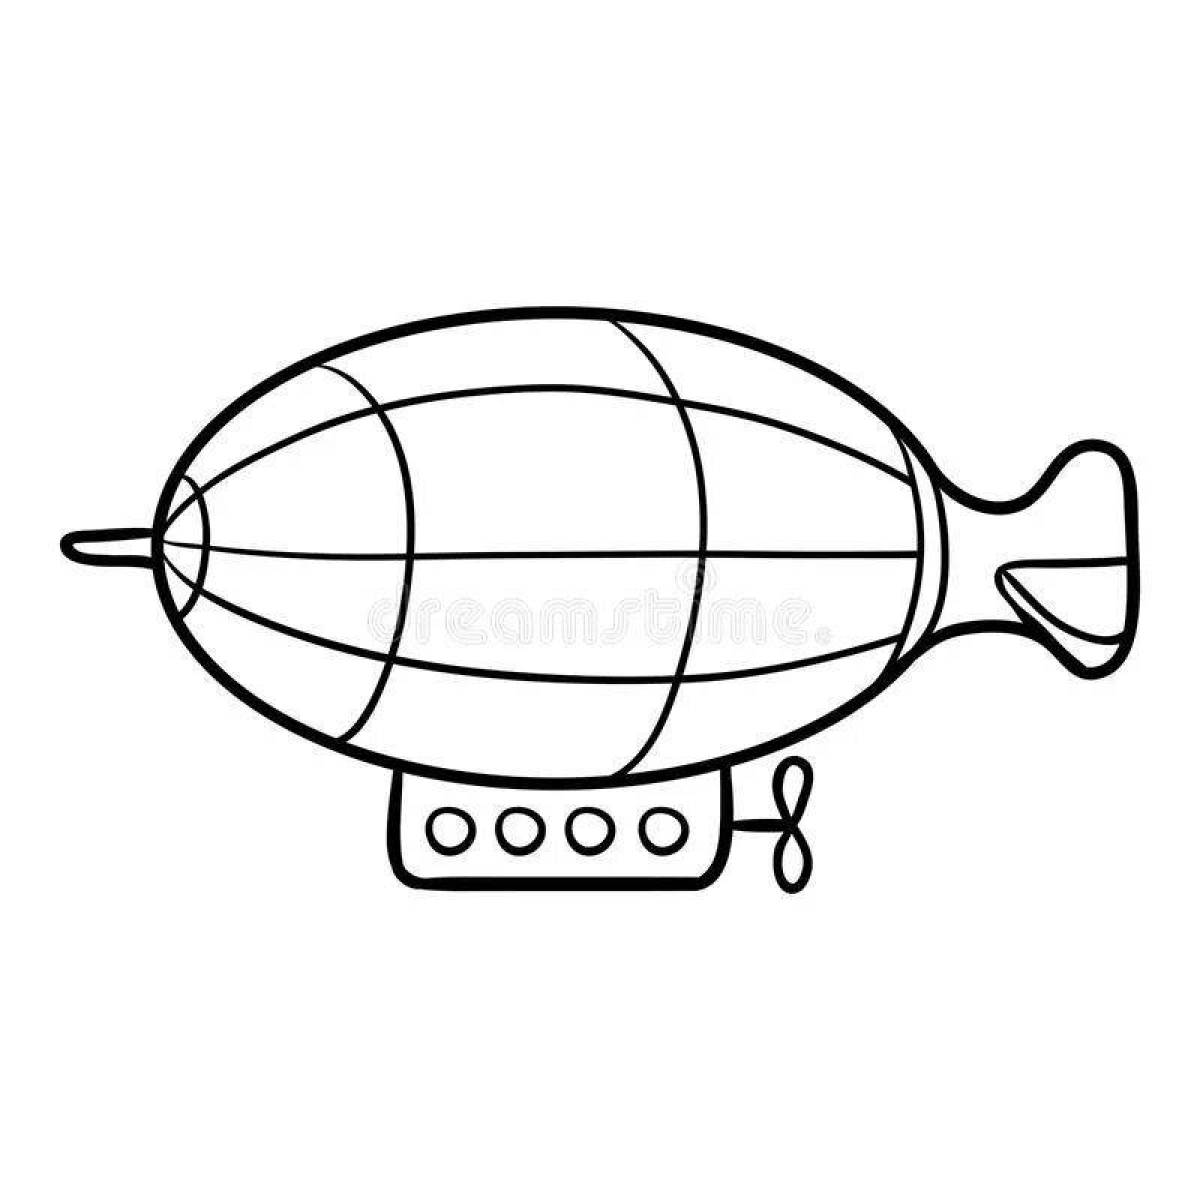 Glorious airship coloring page